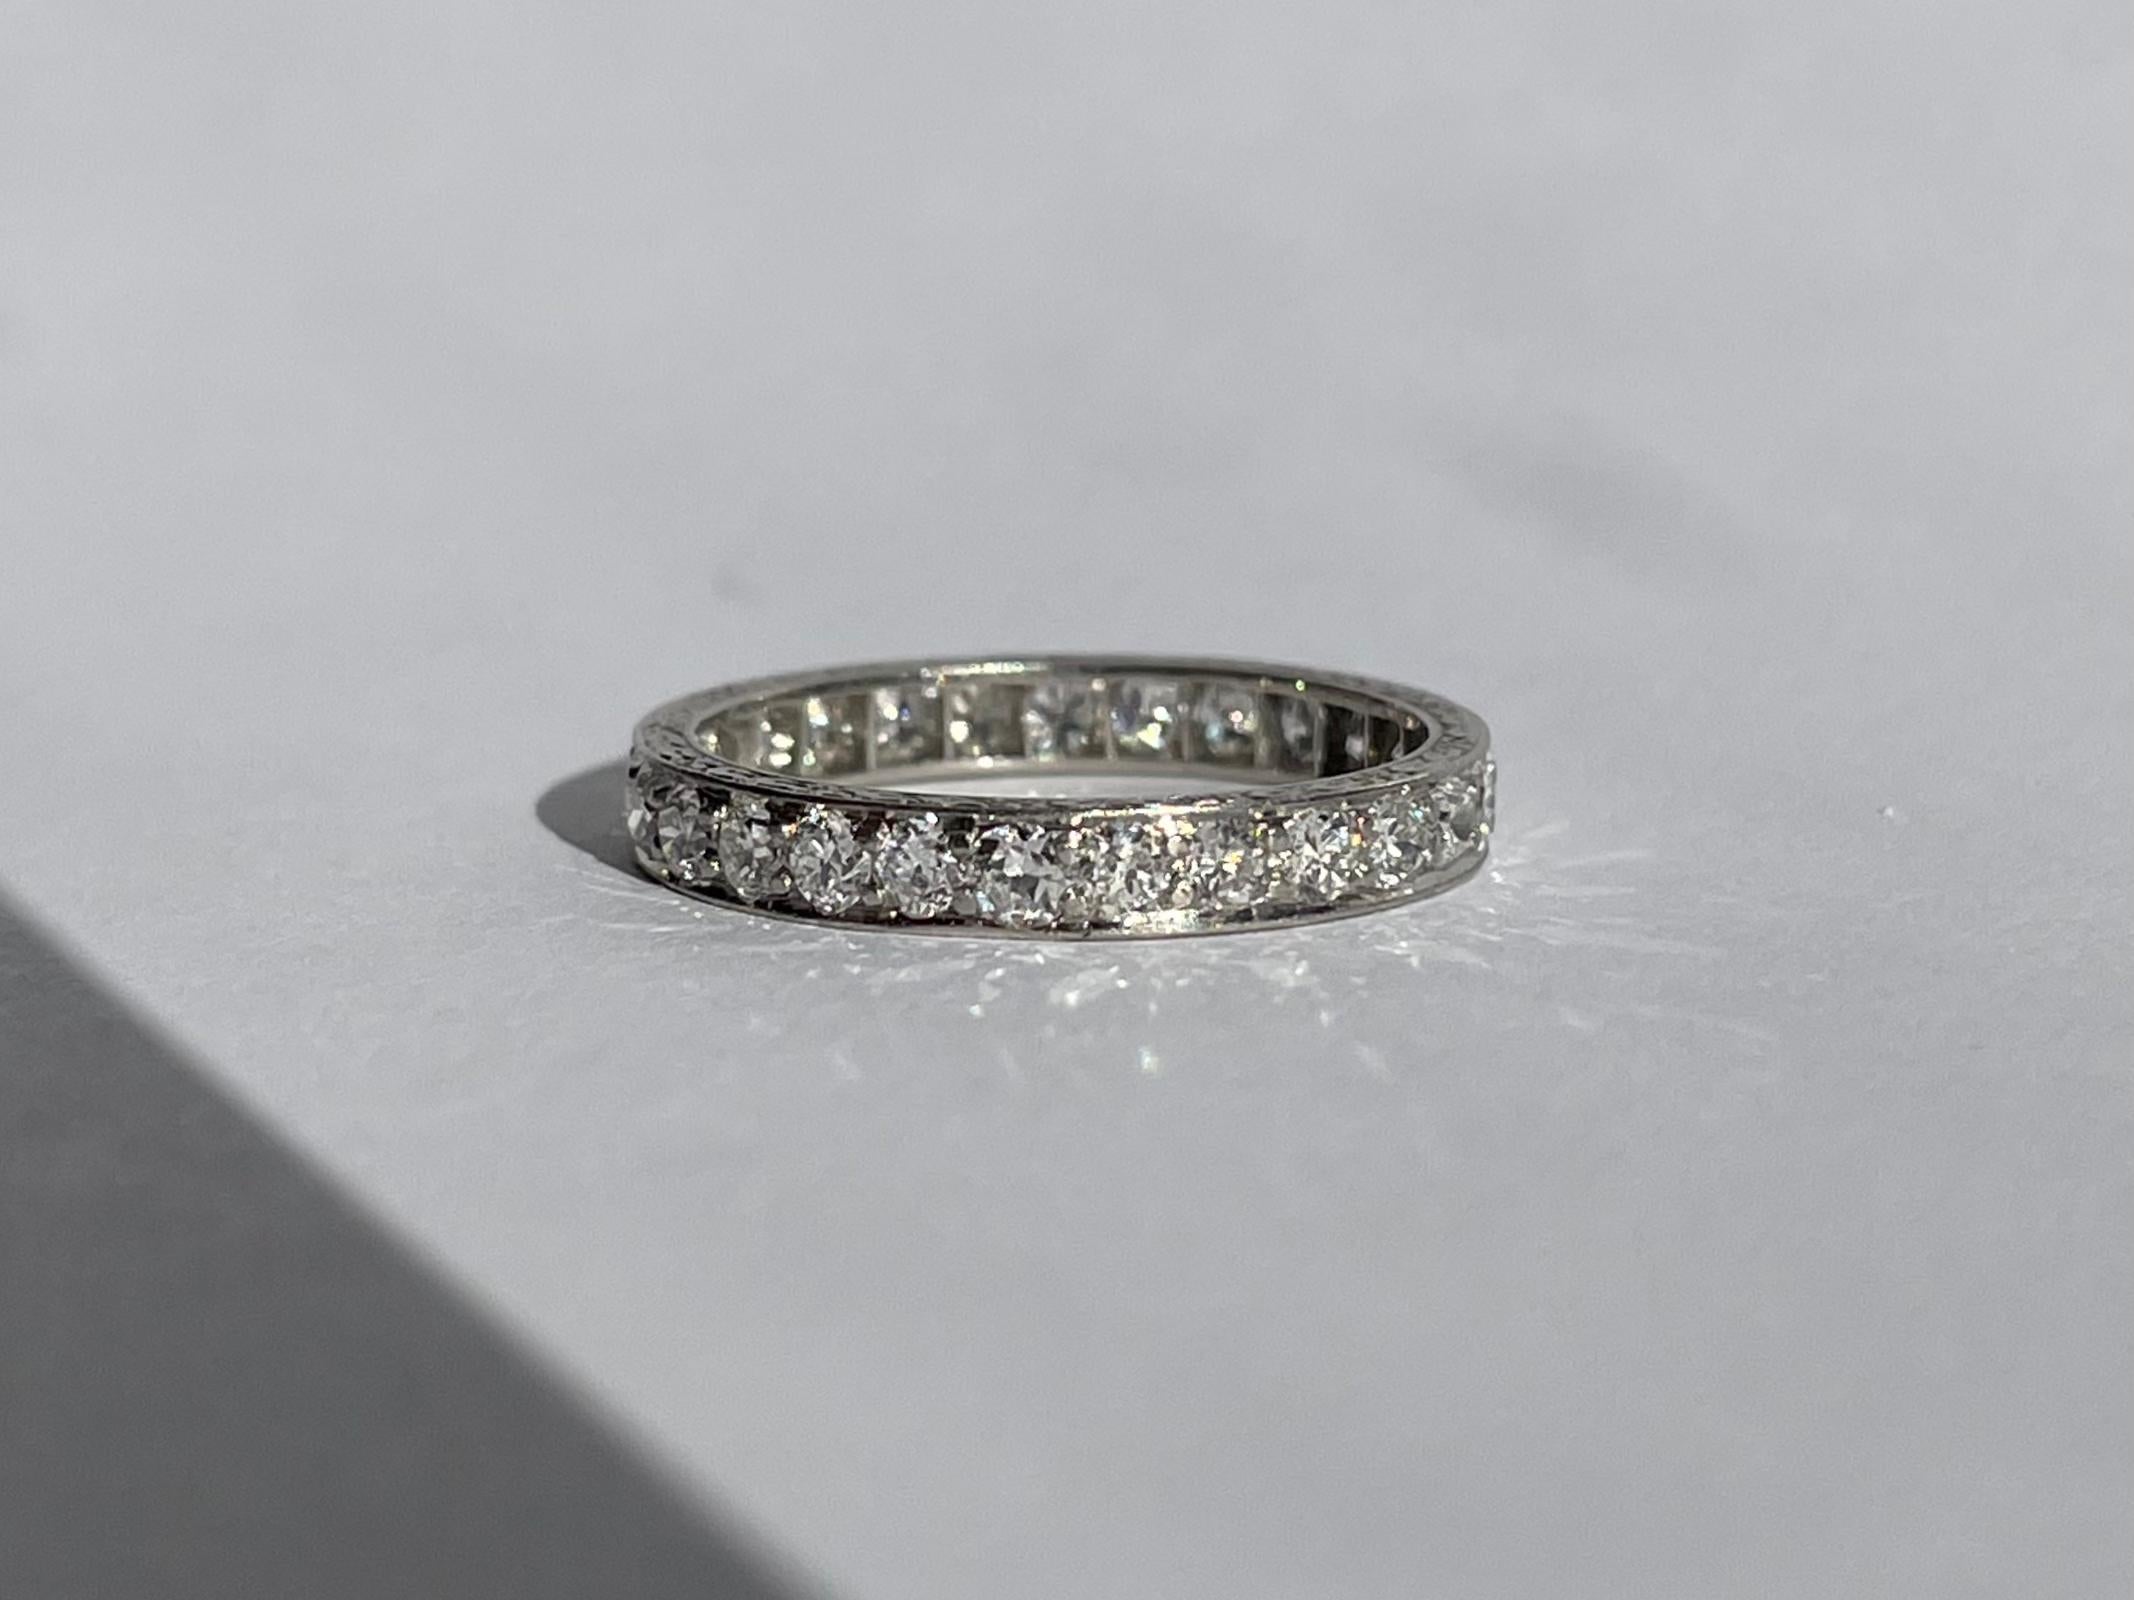 Dazzling Art Deco 2.26 Carat Diamond Eternity Band Ring in Platinum Circa 1920's In Good Condition For Sale In Boston, MA